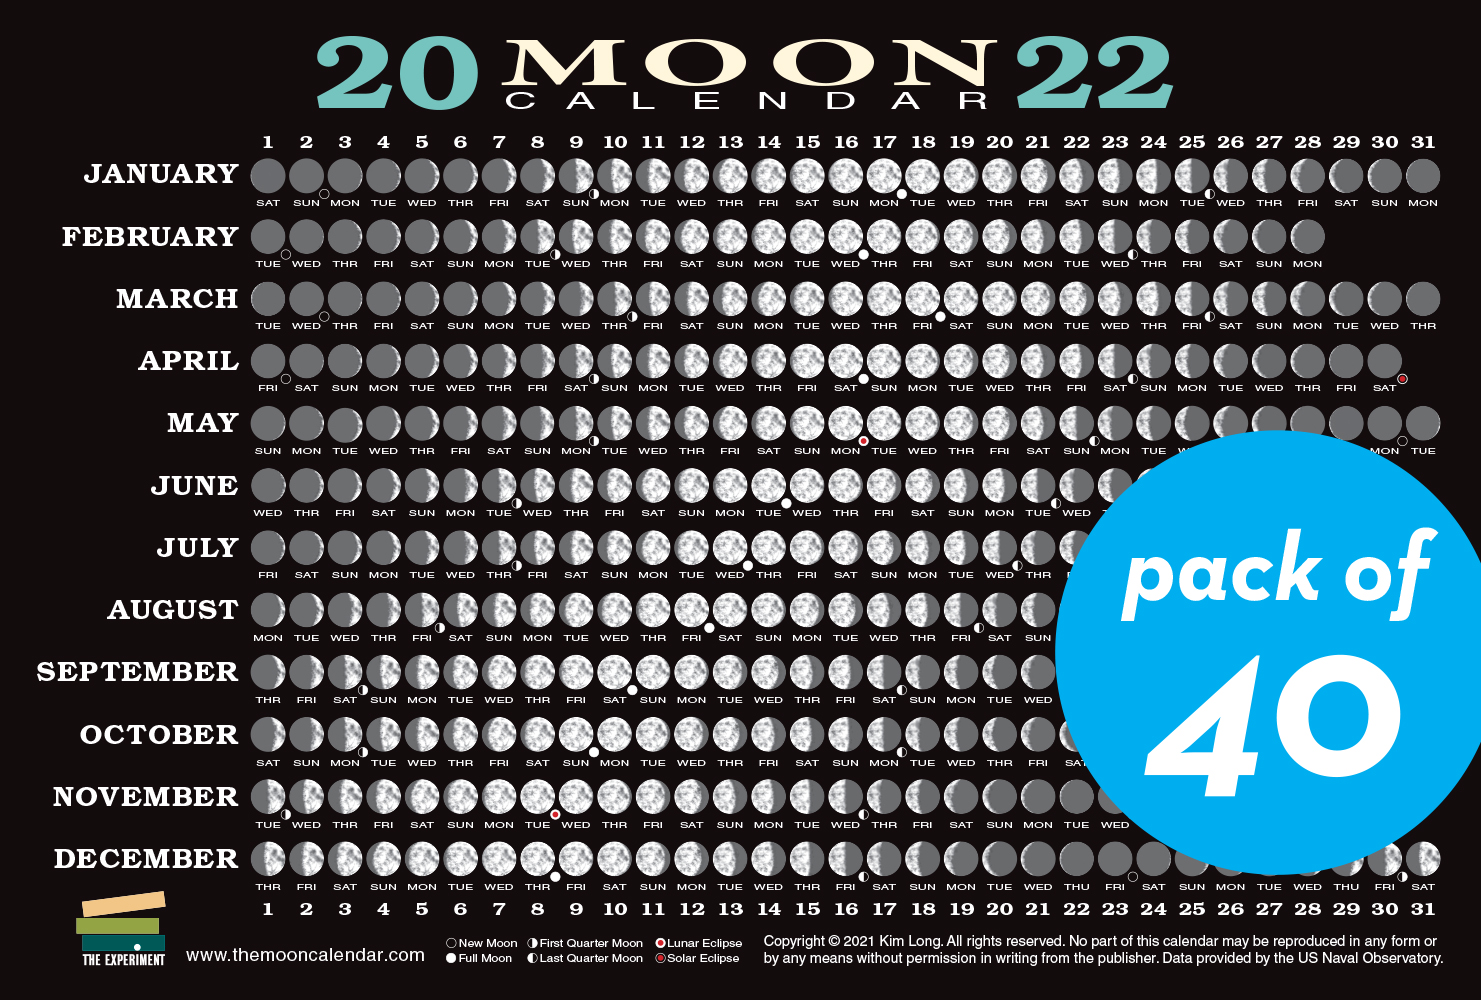 Moon Phase Calendar July 2022